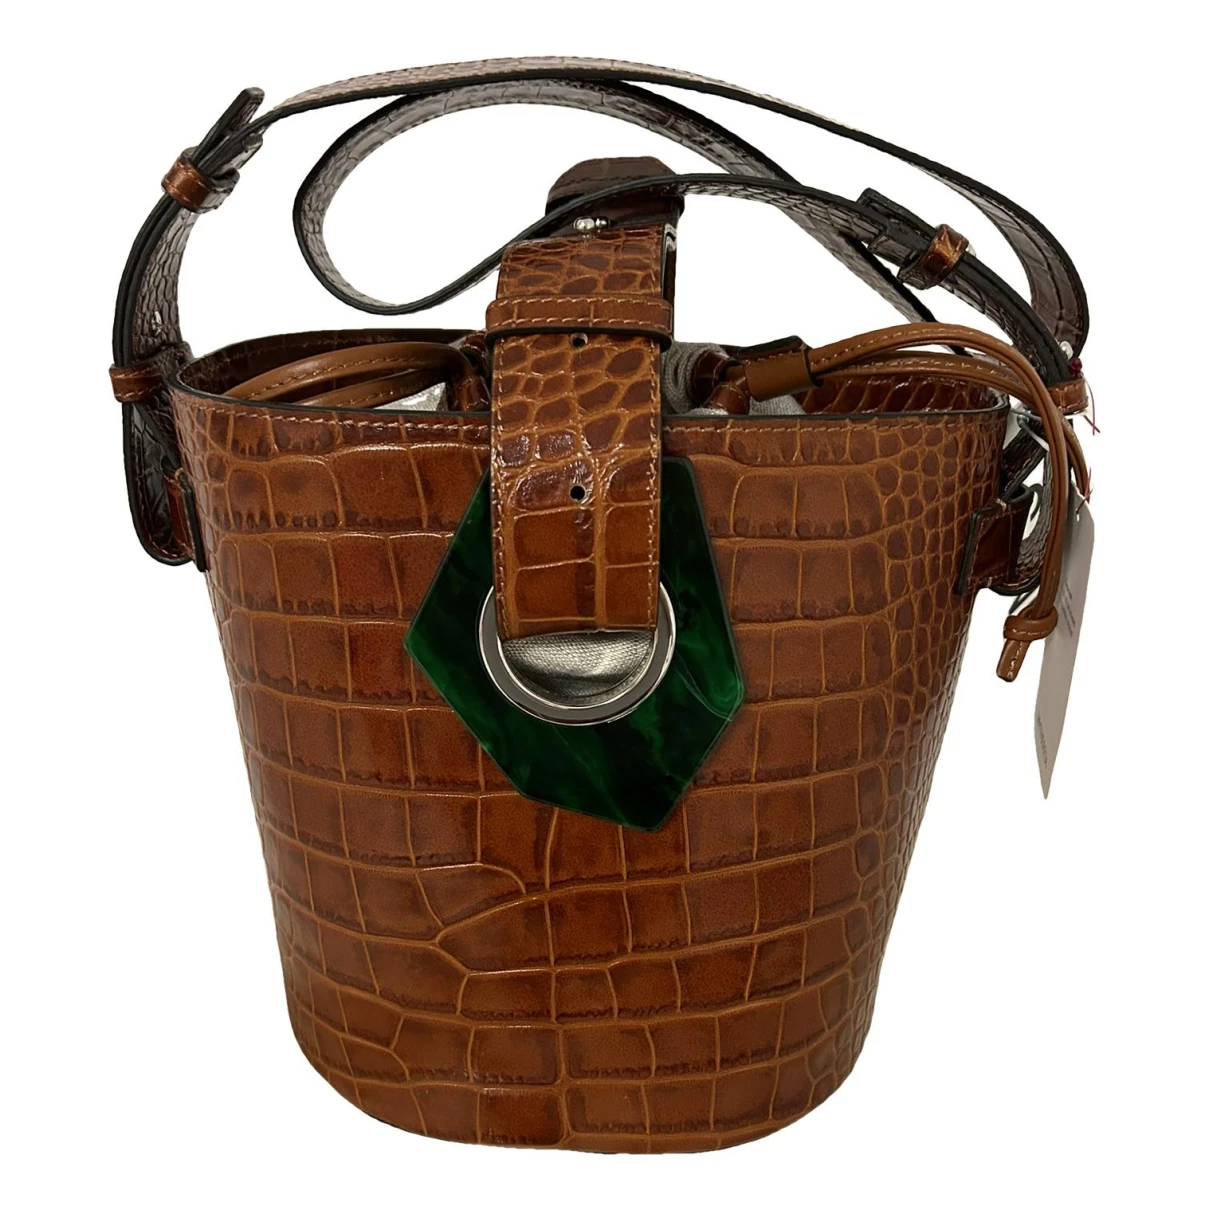 Pre-owned Ganni Leather Handbag In Brown